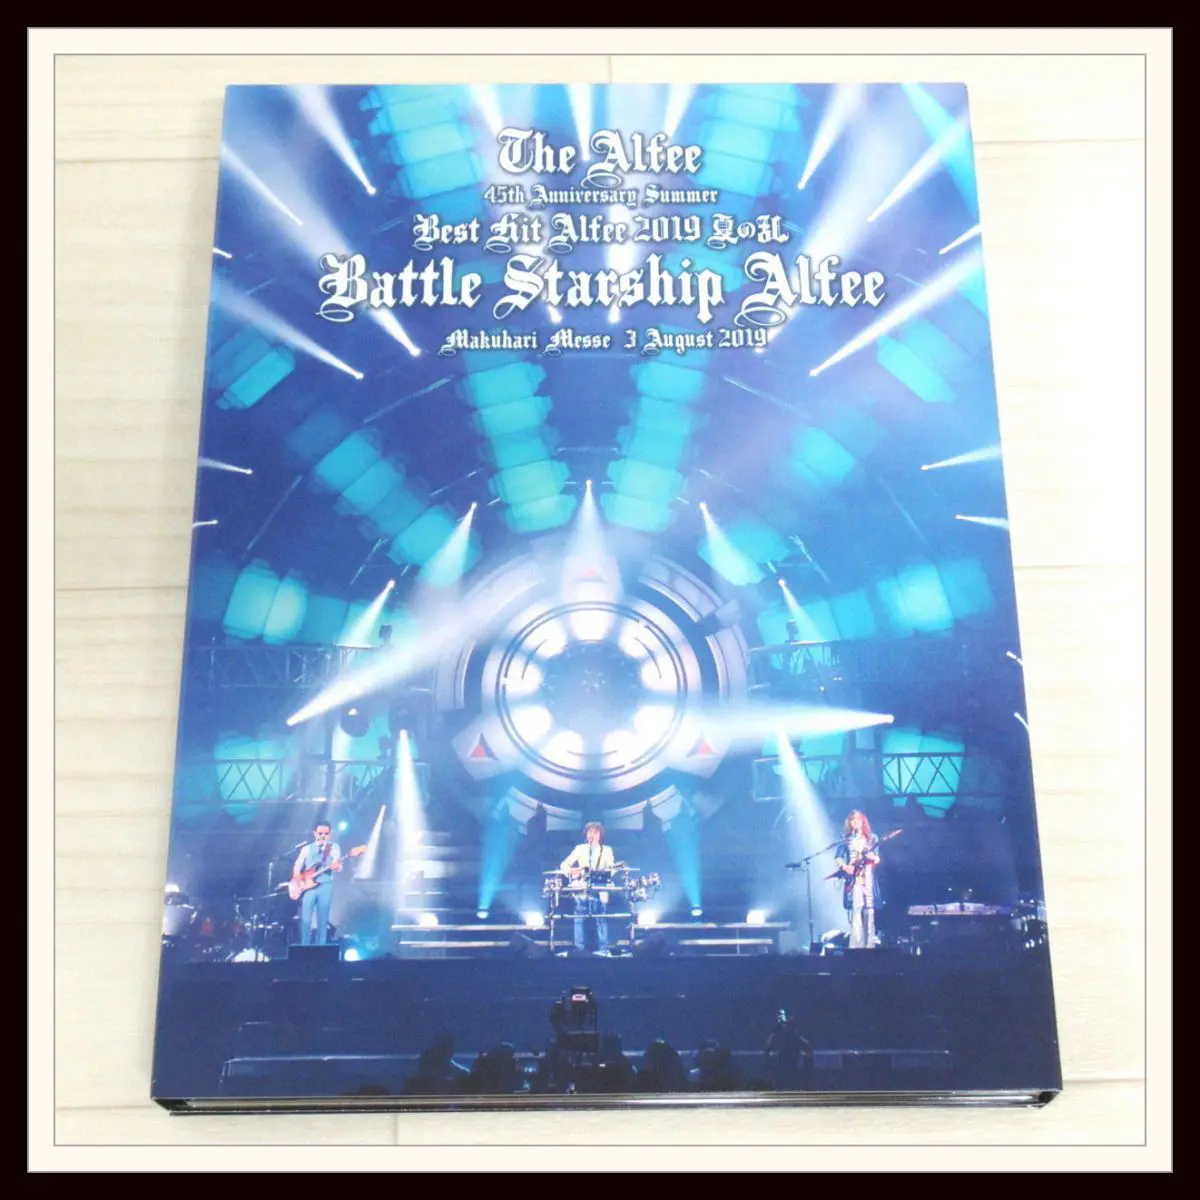 THE ALFEE 45th Anniversary Summer Best Hit Alfee 2019 夏の乱 Battle Starship Alfee Makuhari Messe 2019 DVD 